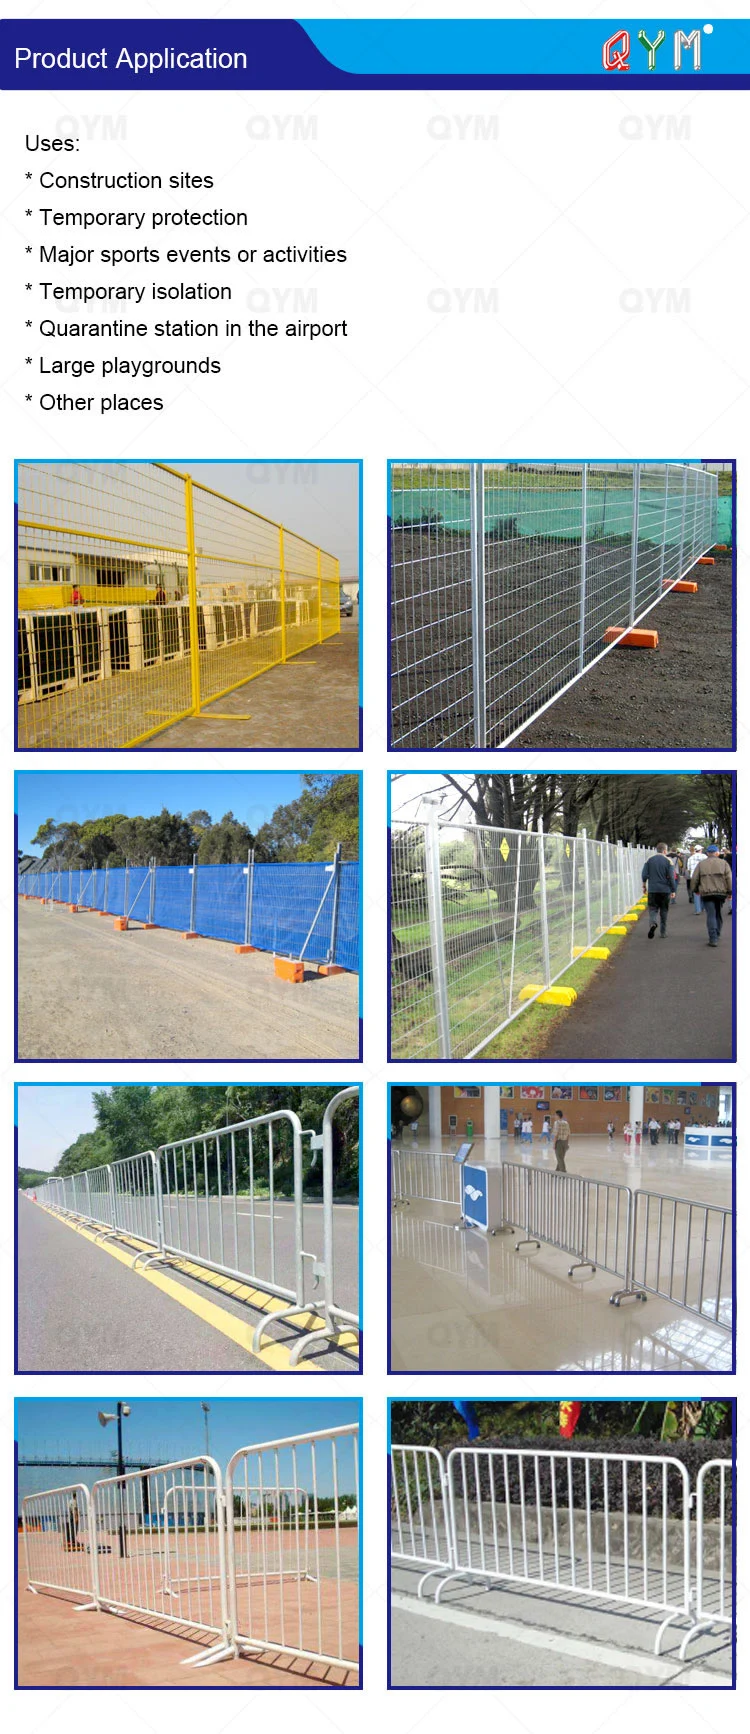 Australia Standard Temporary Fence Galvanized Welded Construction Temporary Fence